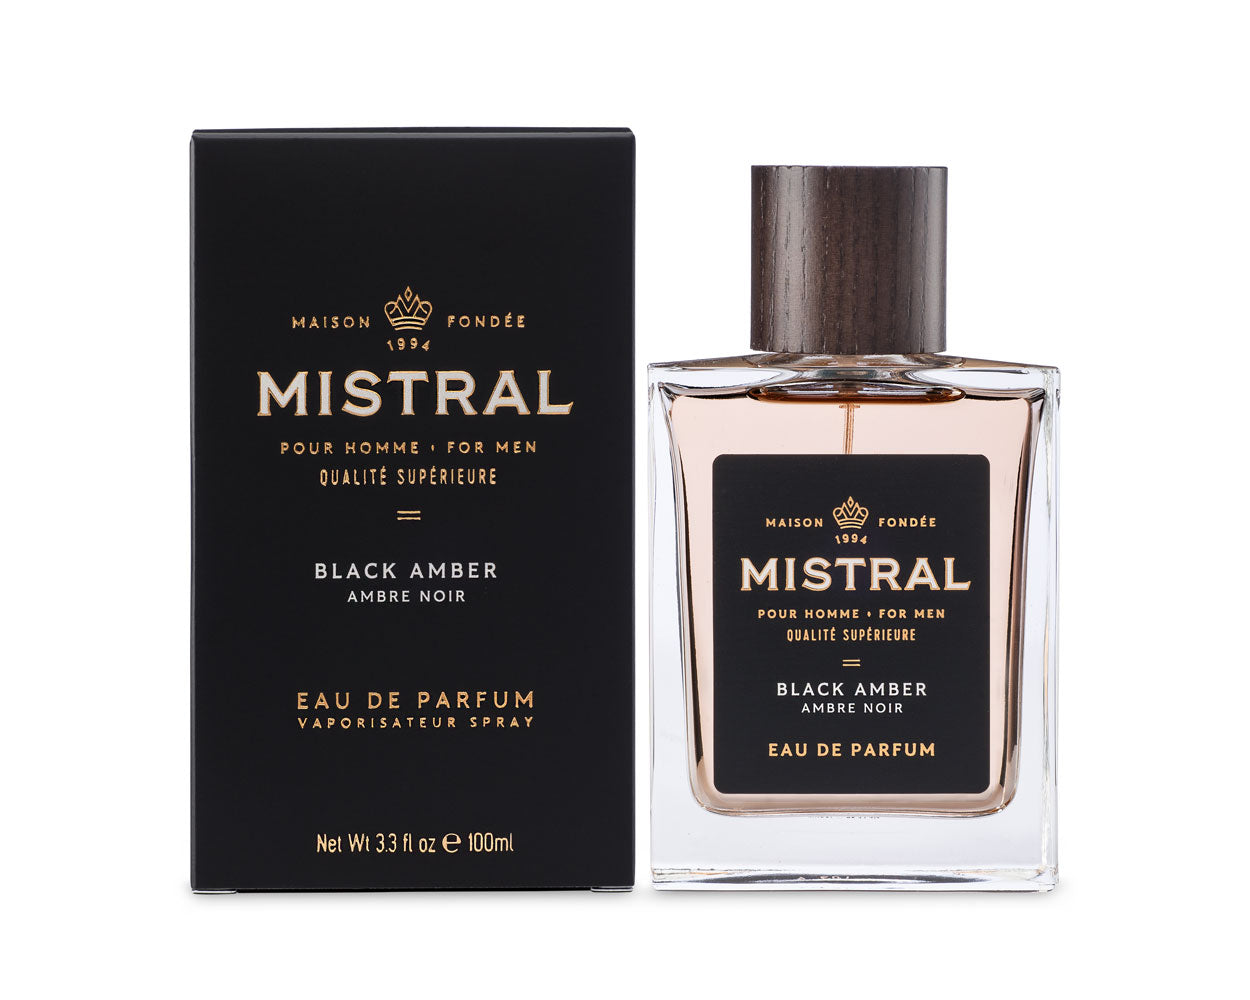 black box beside glass bottle with wood top of mistral for men eau de parfum cologne in scent black amber